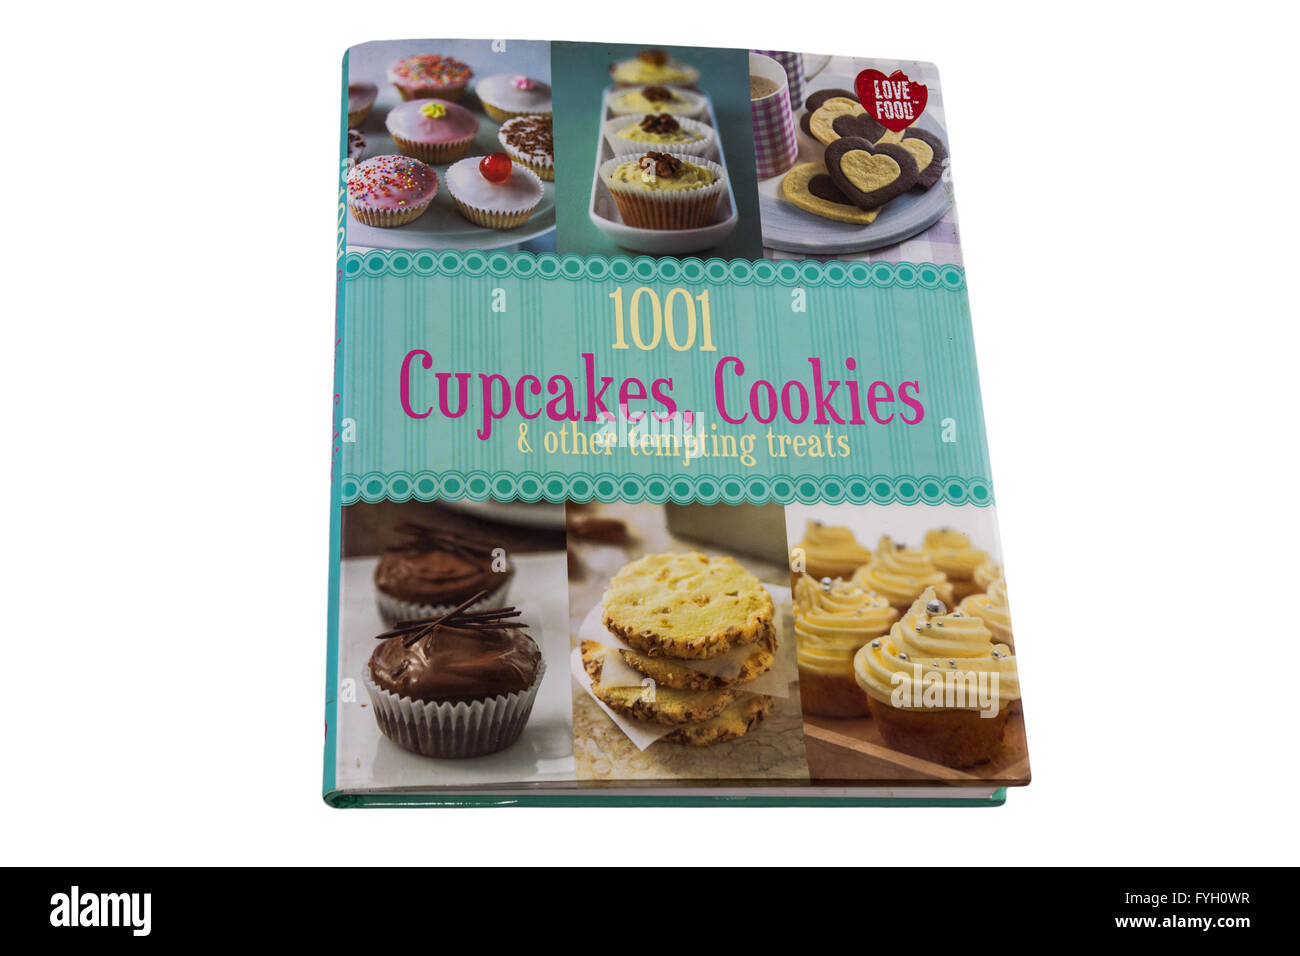 1001 Cupcakes, Cookies & Tempting Treats - Love Food Stock Photo